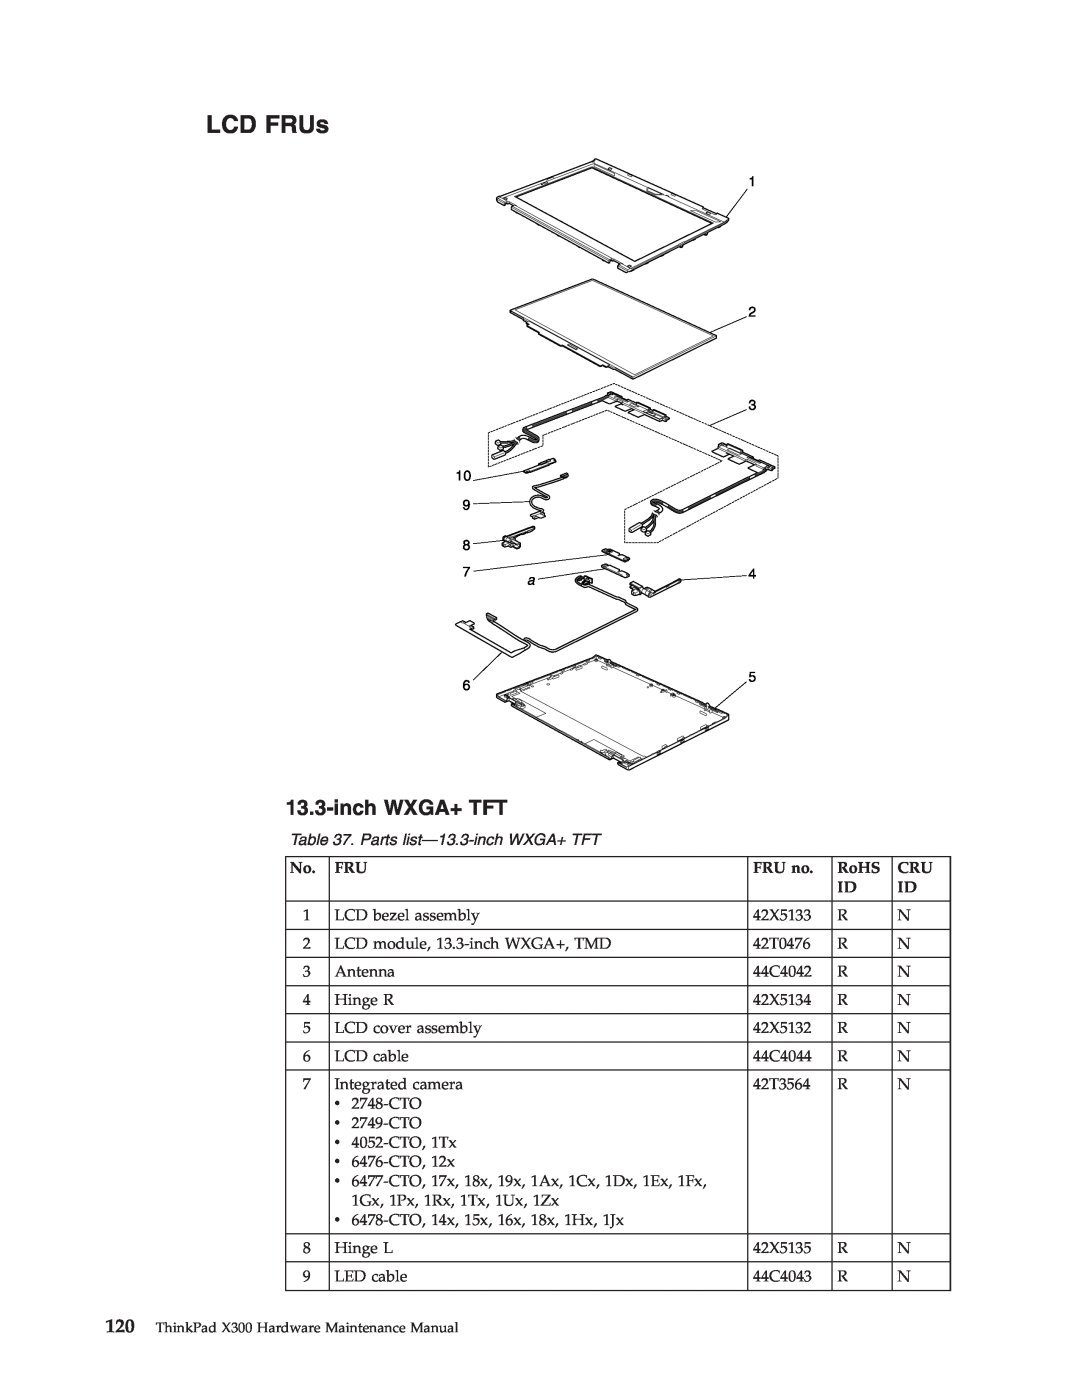 Lenovo X300 manual LCD FRUs, Parts list-13.3-inch WXGA+ TFT 